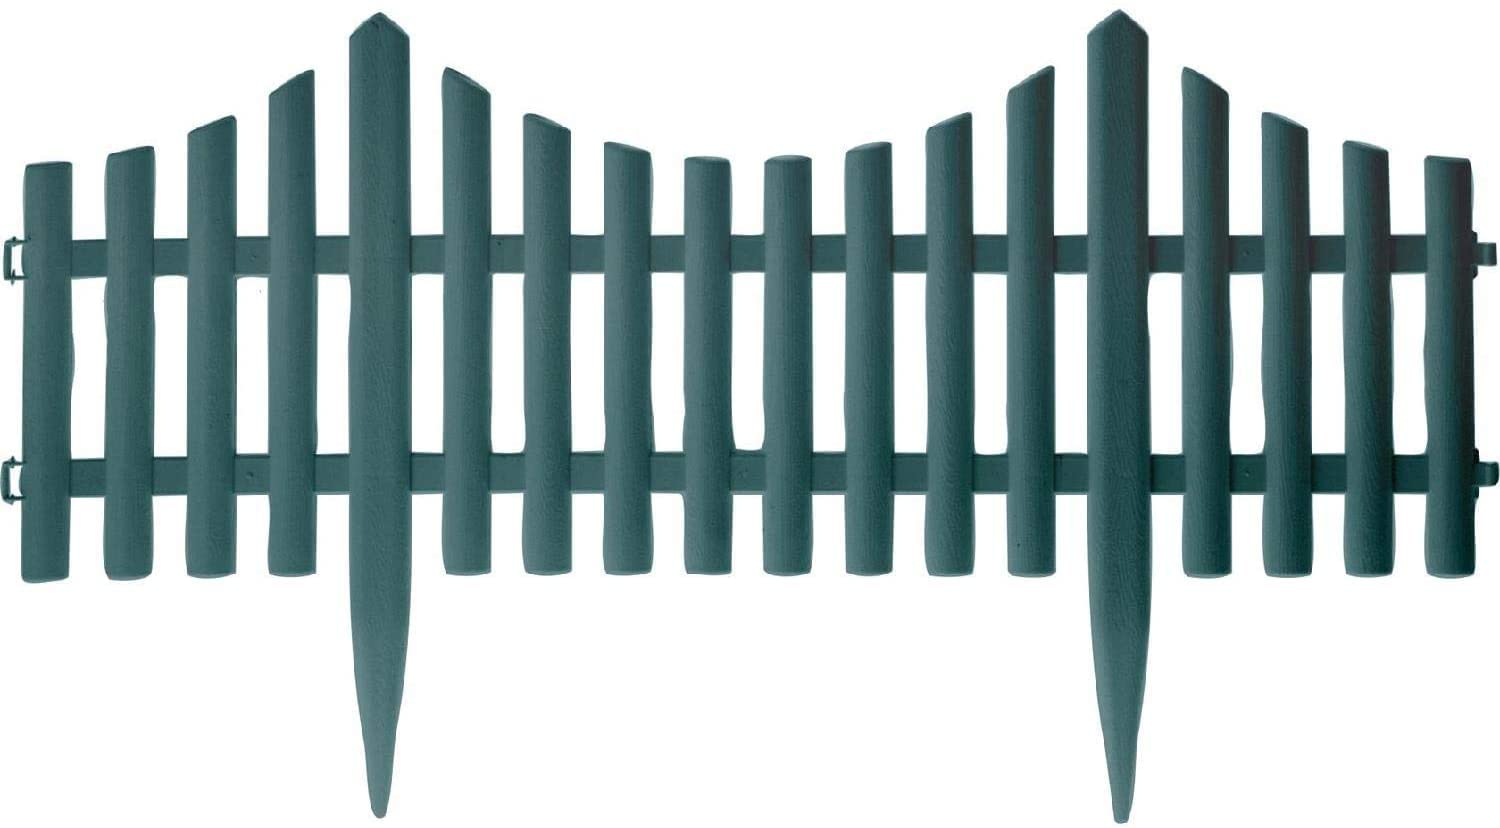 Garden Picket Green Edging Fence (Plastic) ( 24pc)